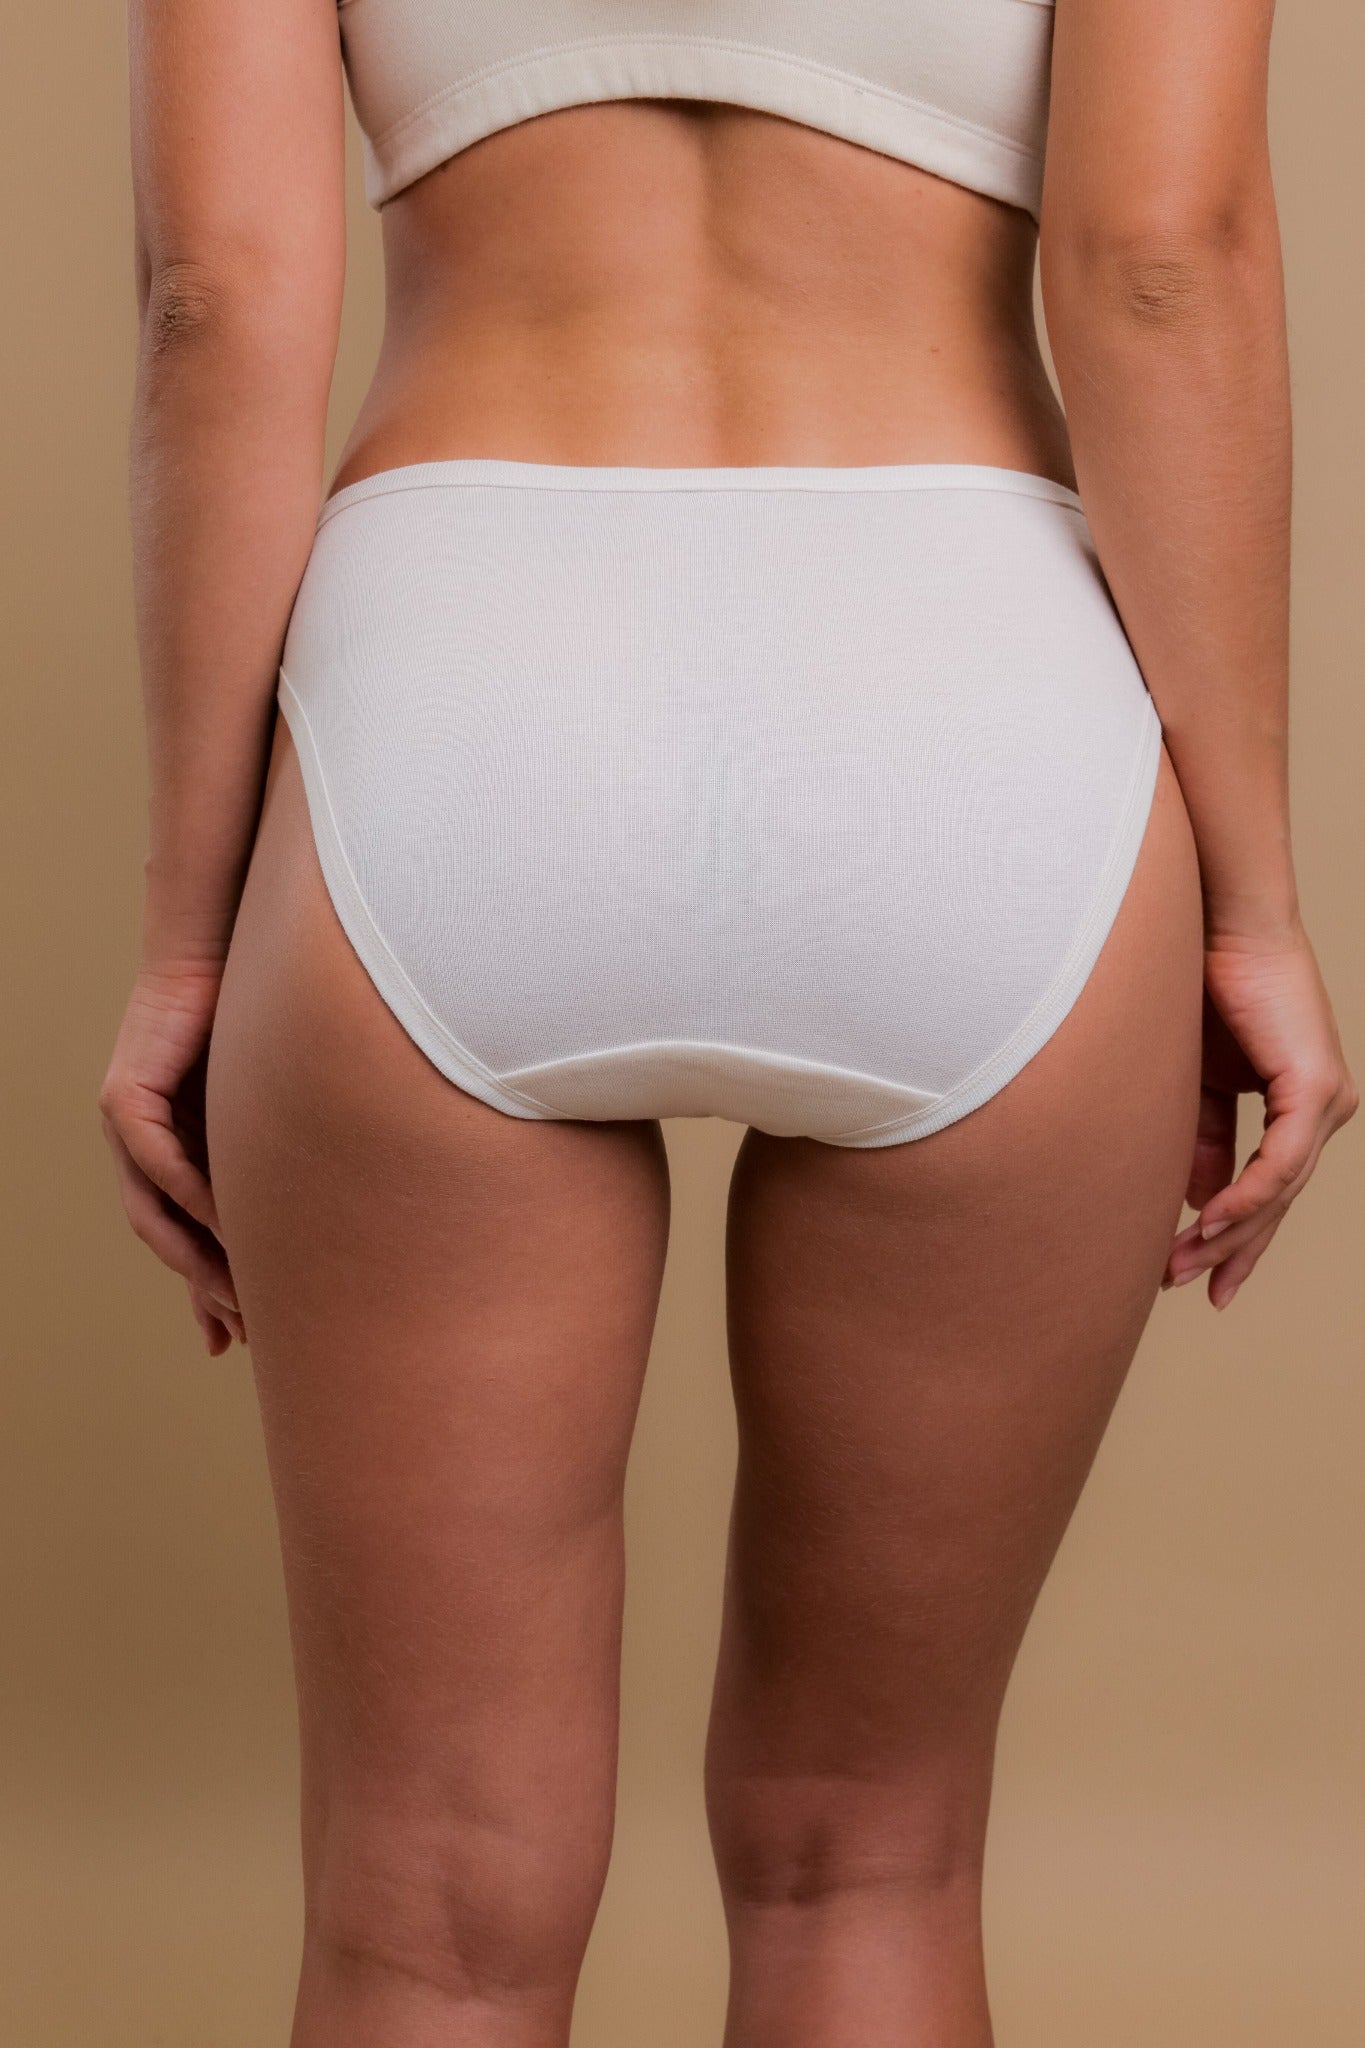 Rumida Detachable Latex Seamless Underwear without Steel Wire